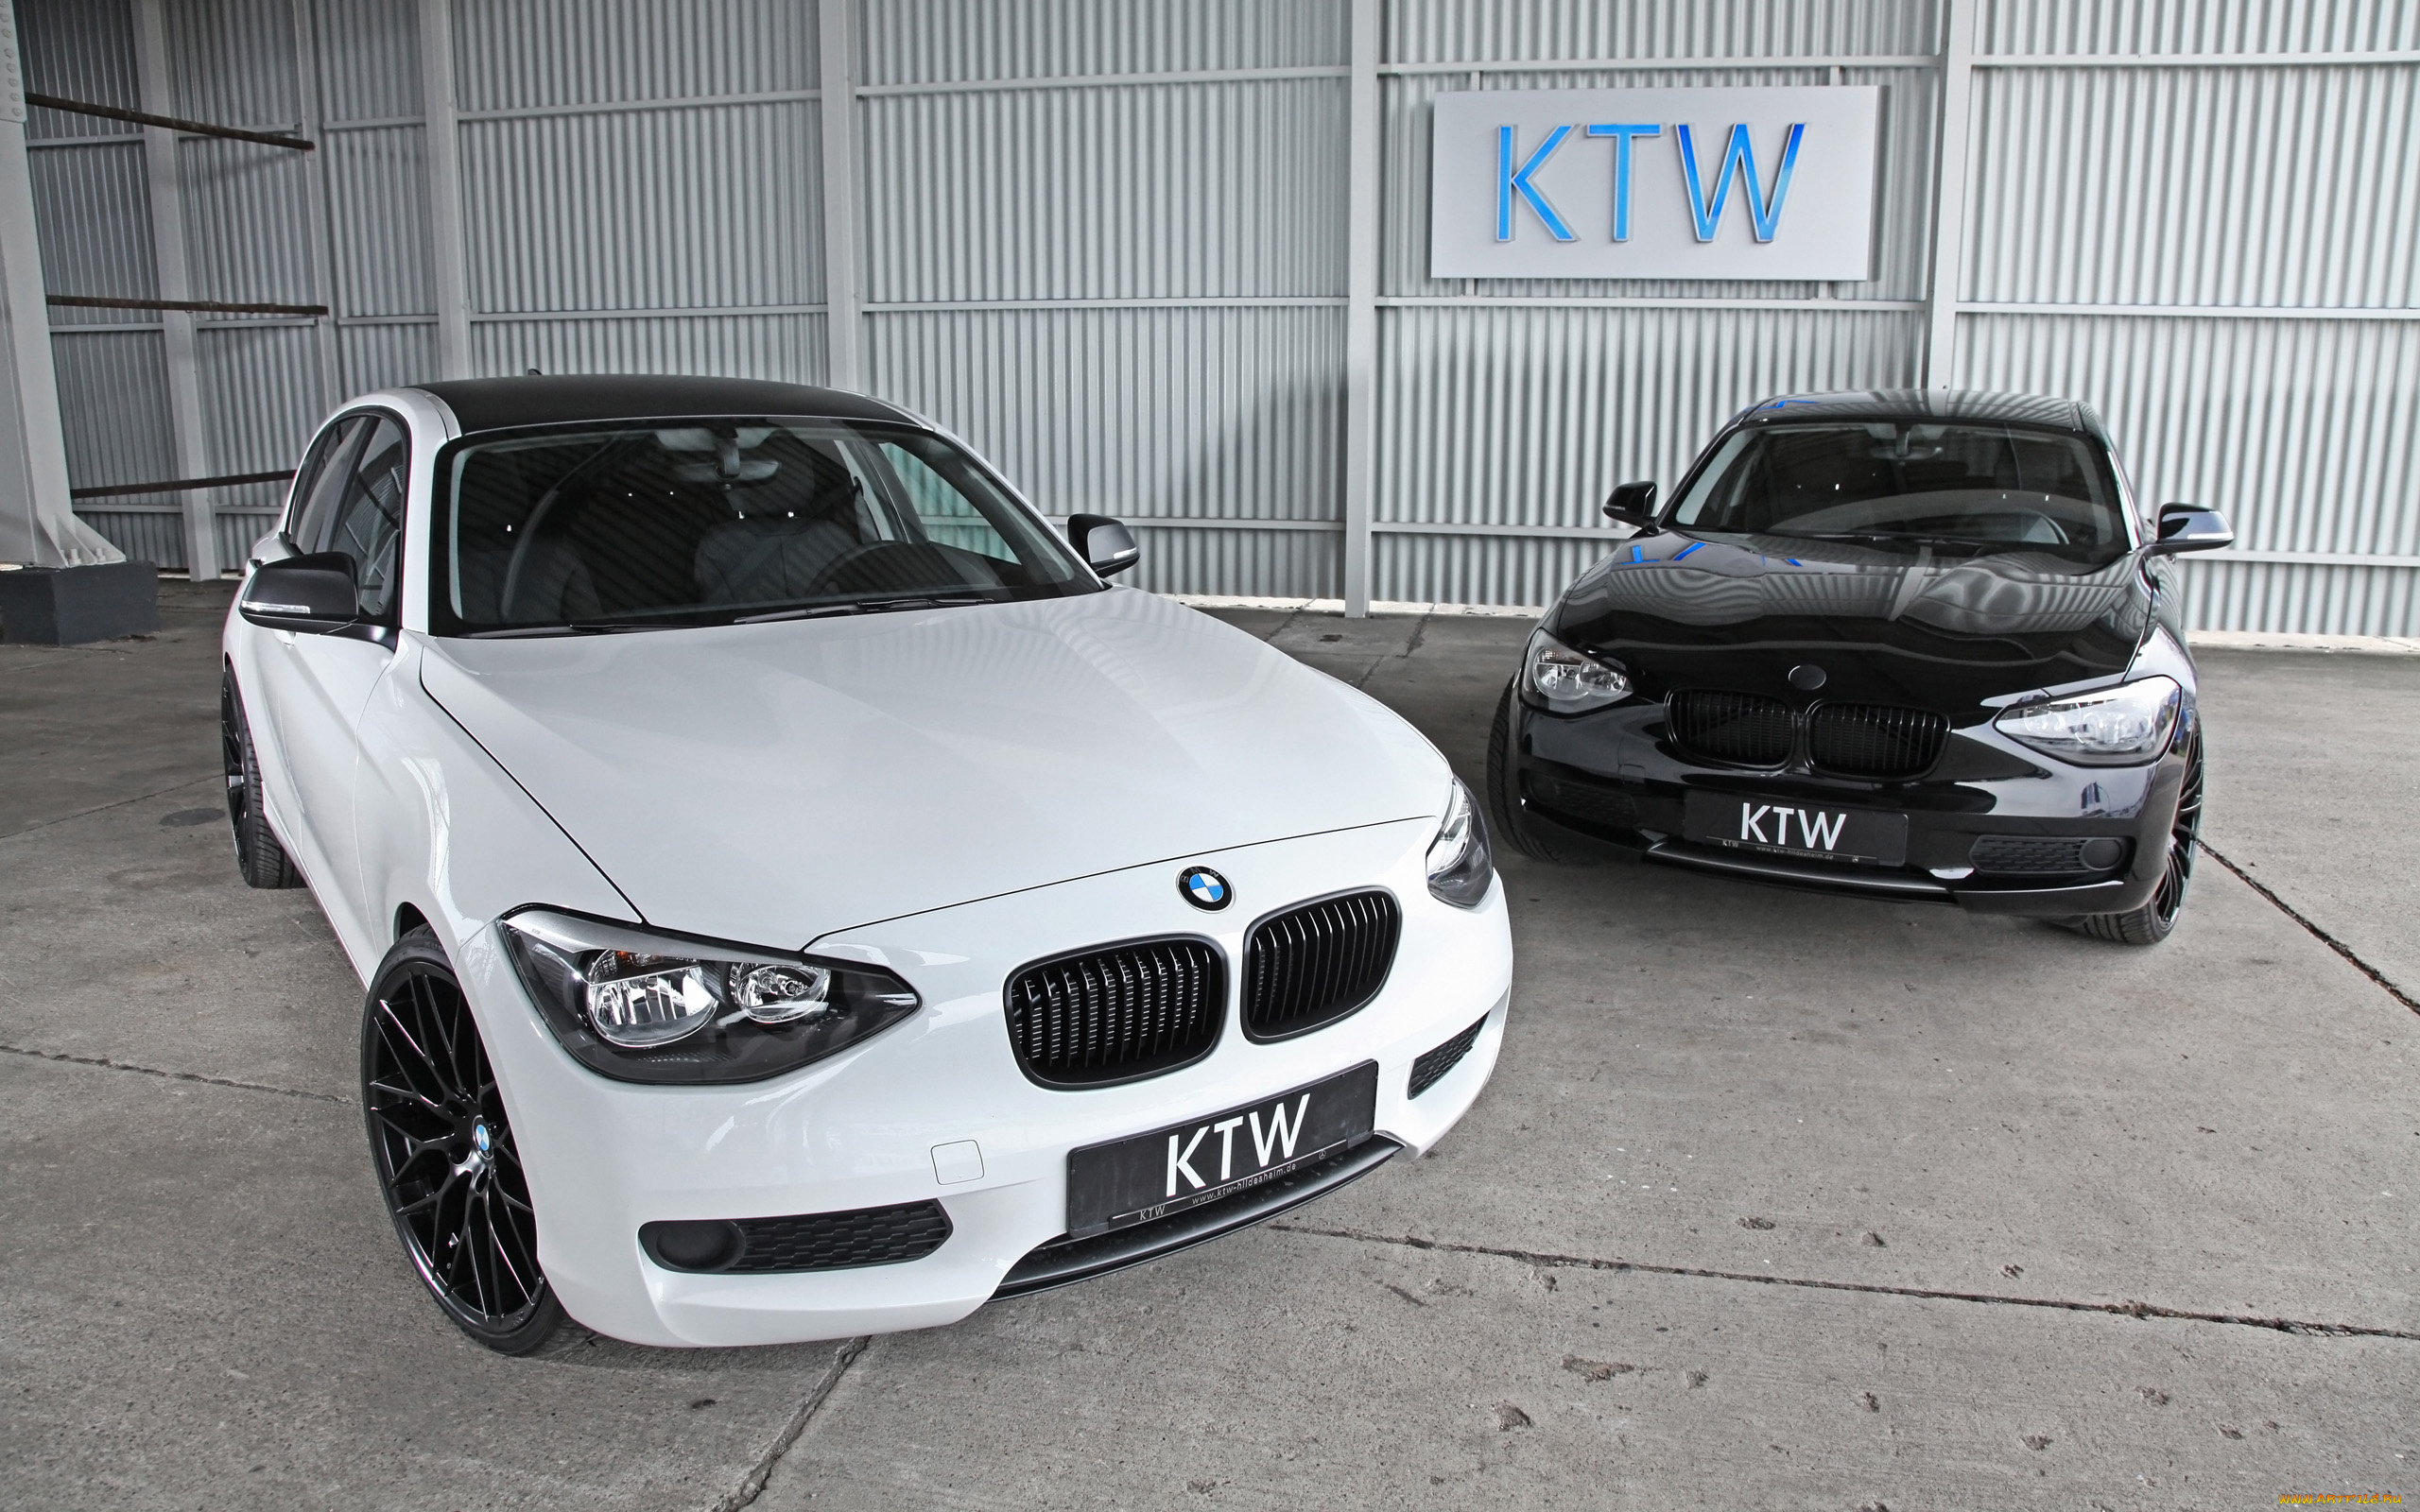 2014-ktw-tuning-bmw-1-series-in-black-and-white, автомобили, bmw, ktw